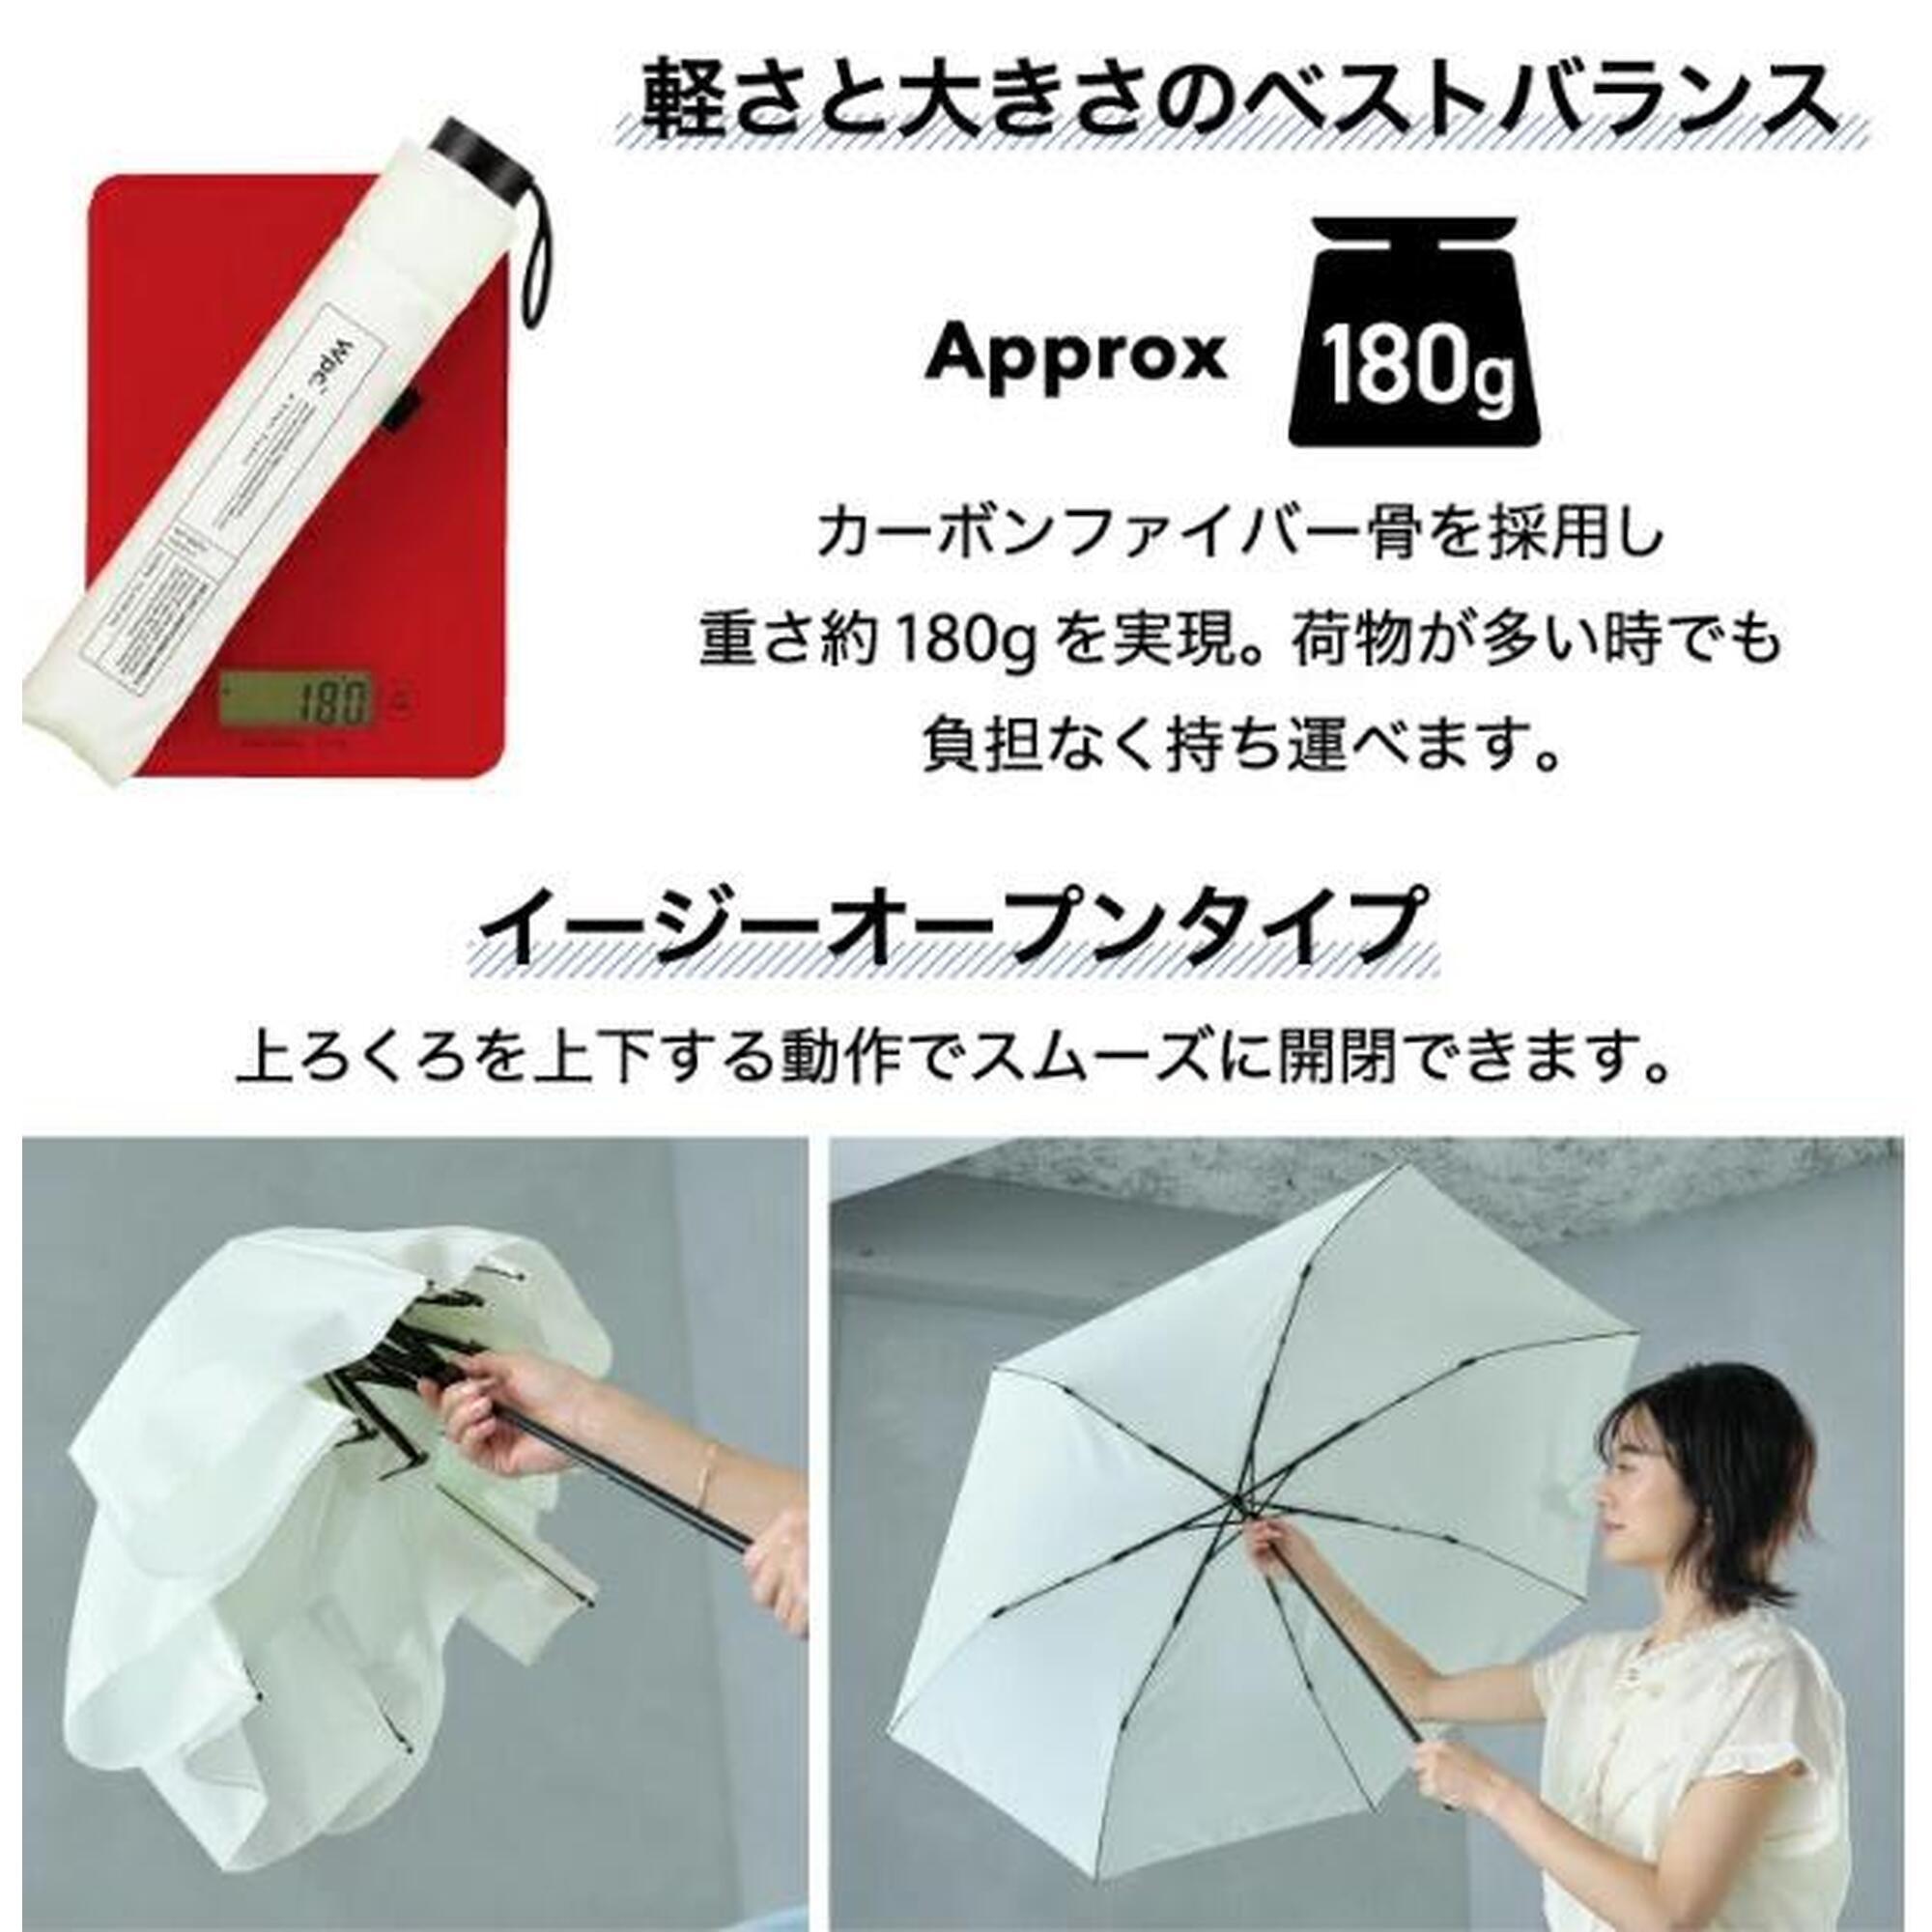 Auto Foldable Umbrella - Light Brown